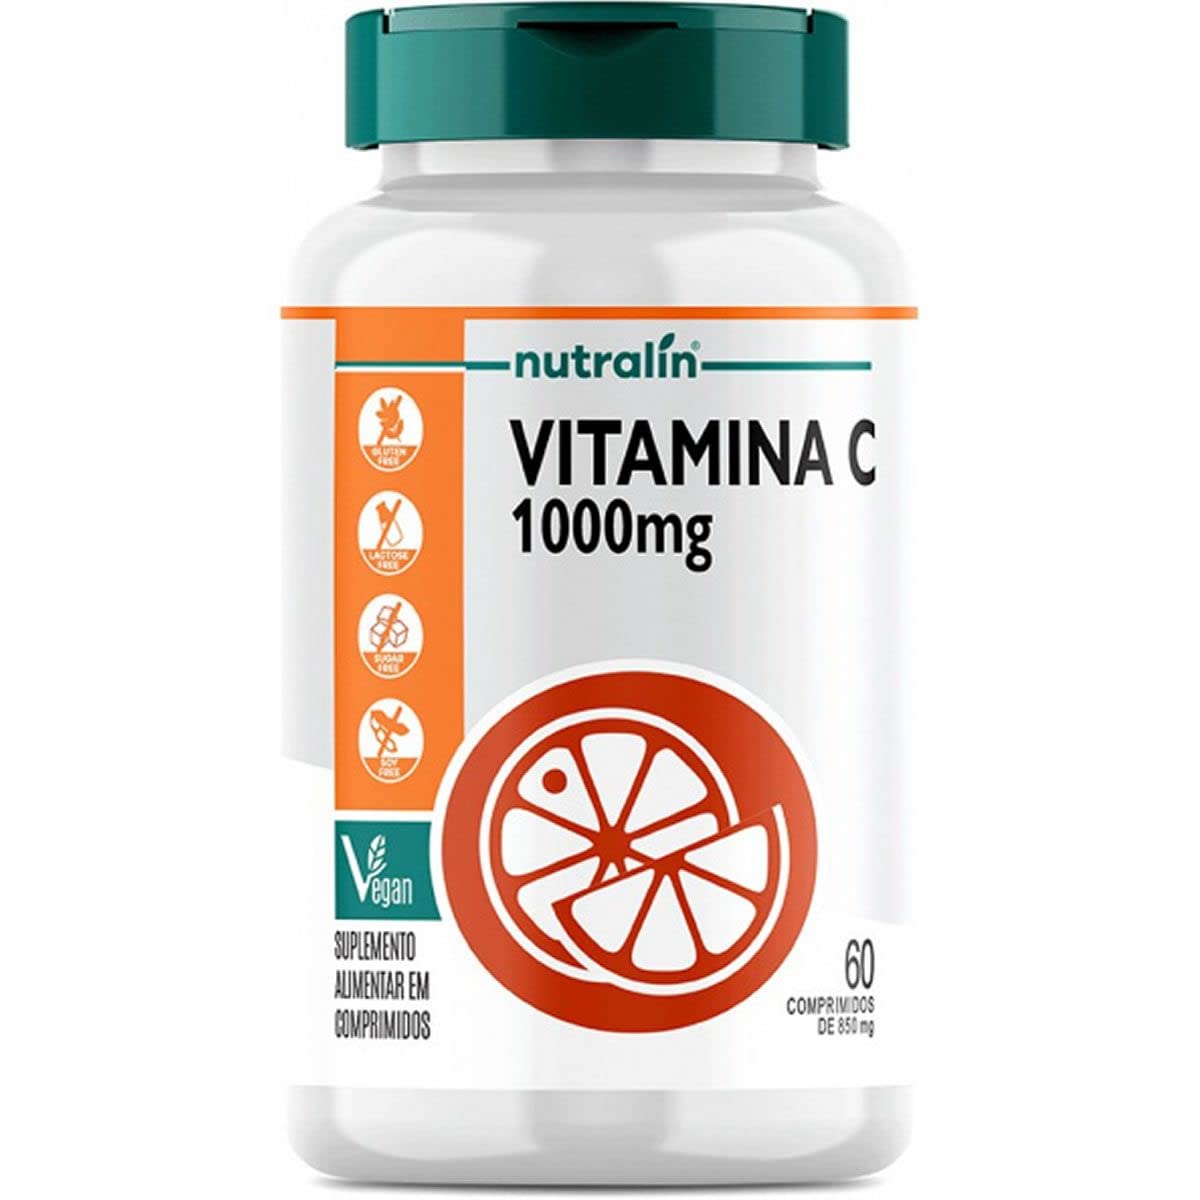 Nutralin Vitamina C